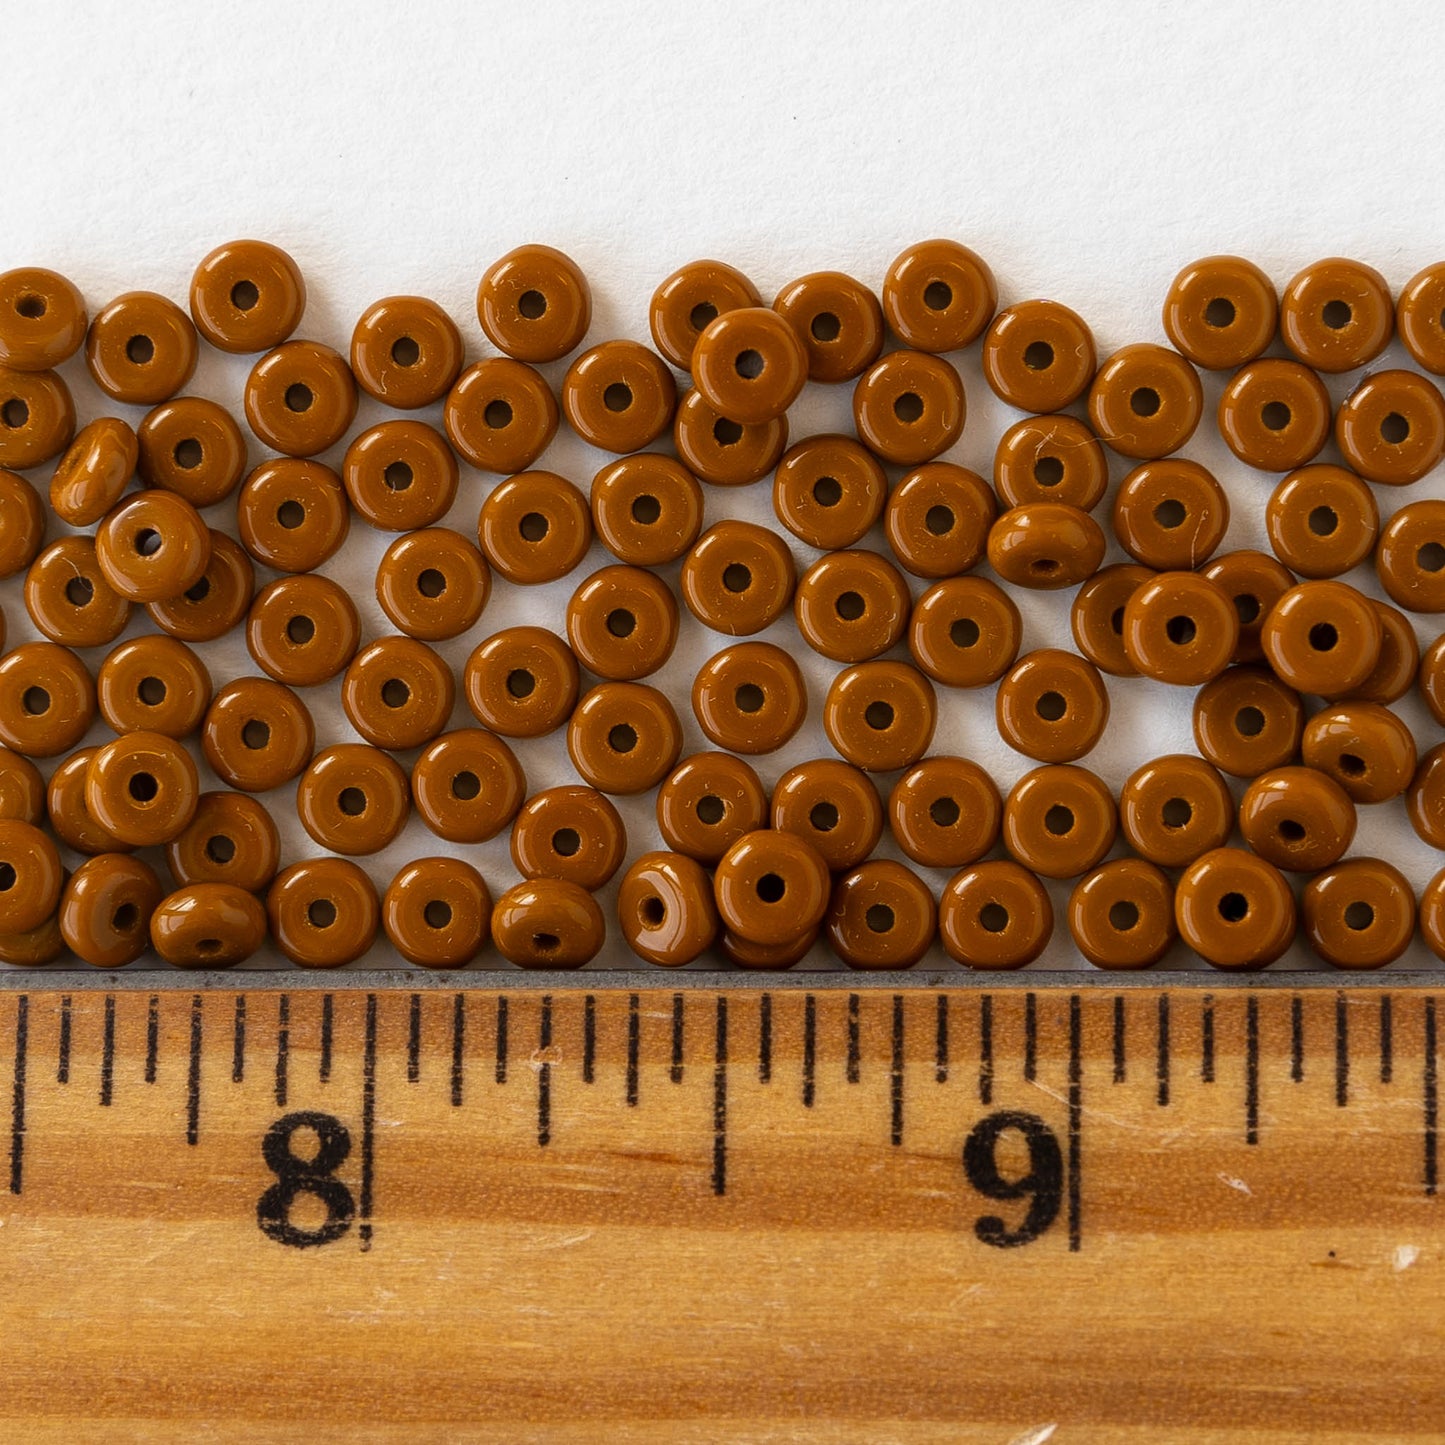 4mm Rondelle Beads - Opaque Brown Ochre - 100 Beads